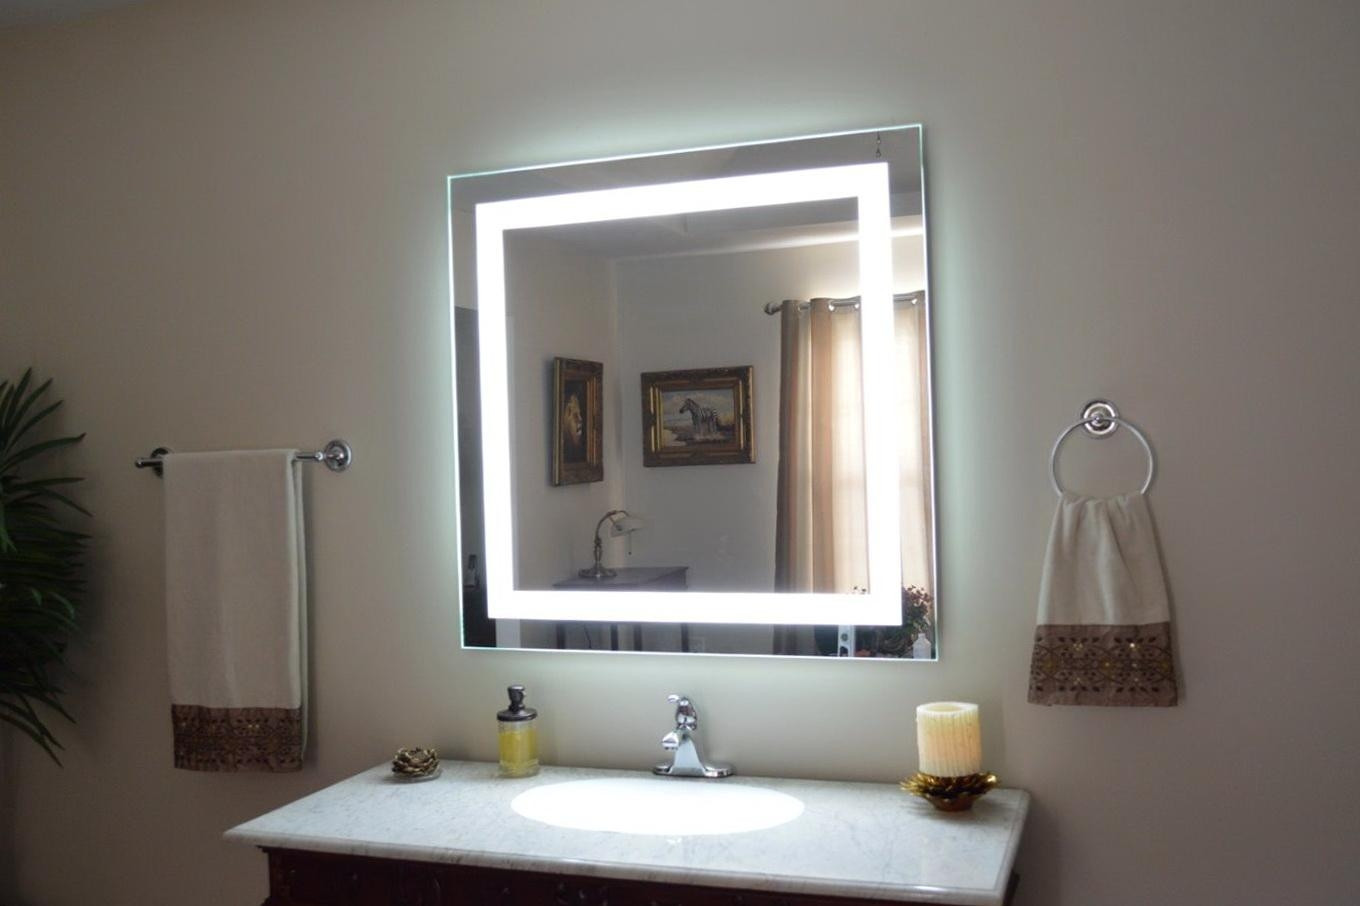 Lighted Bathroom Wall Mirror
 Lighted Vanity Wall Mirrors